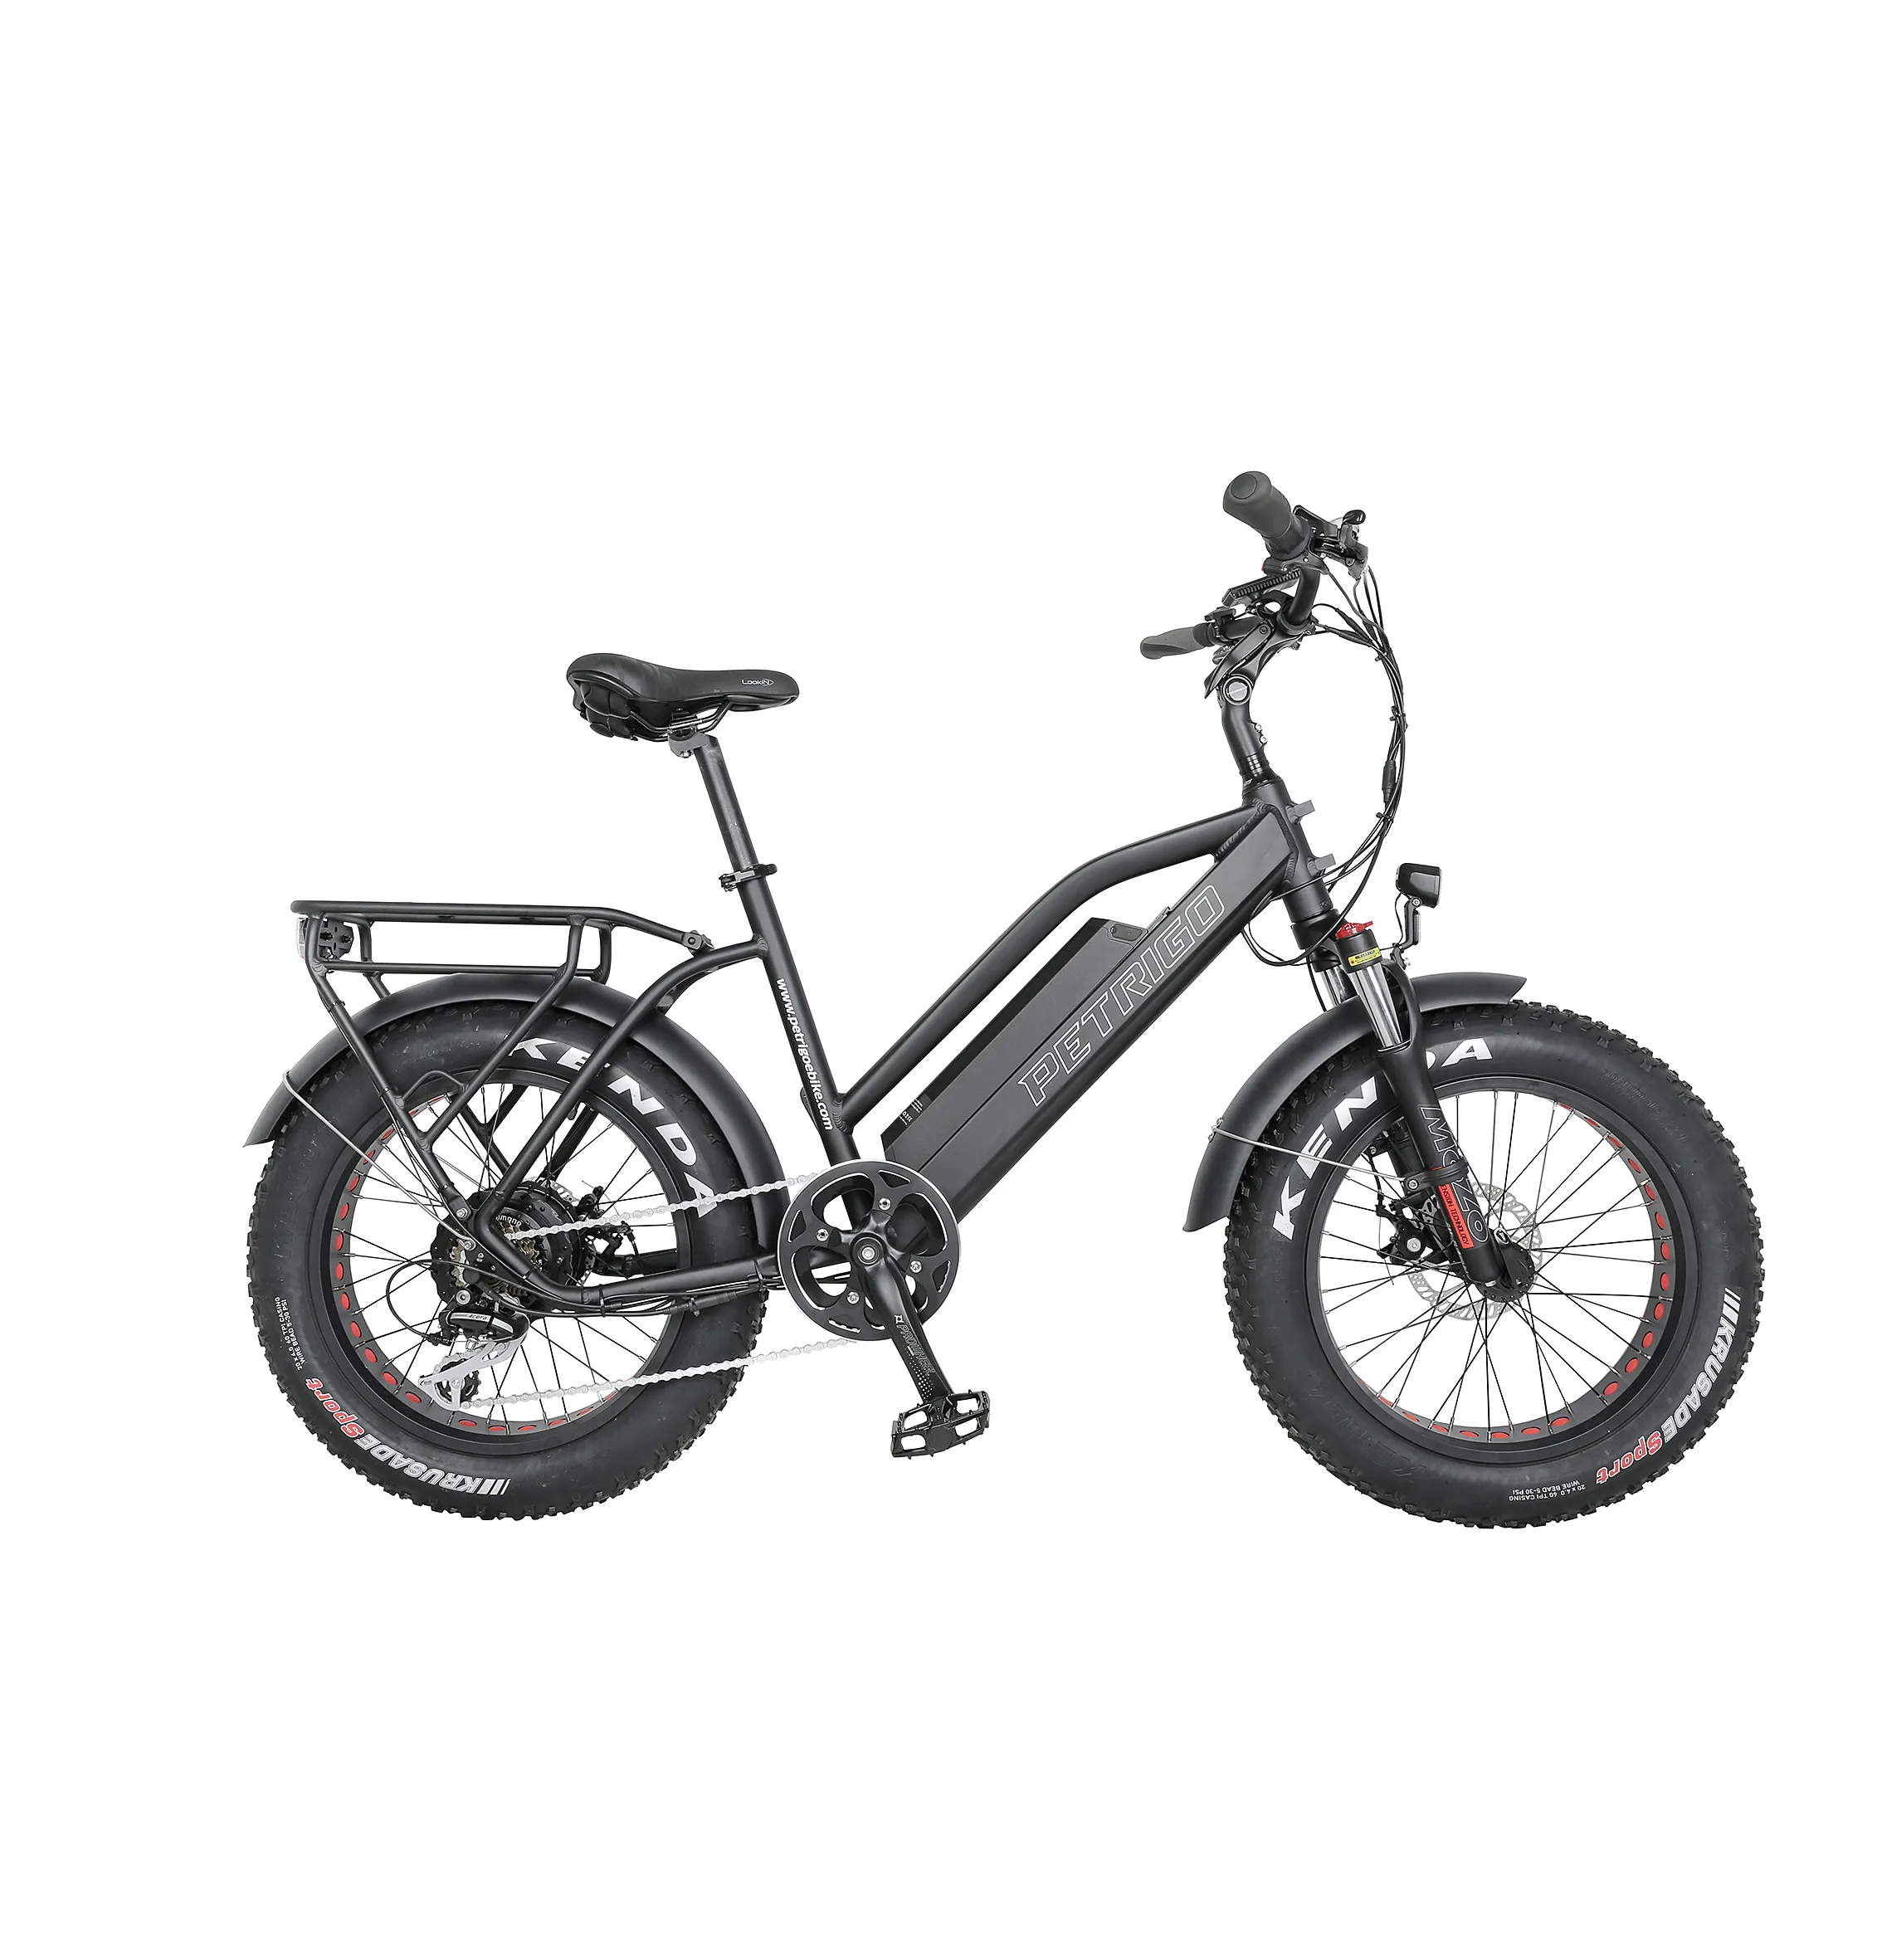 PETRIGO yüksek kaliteli 20 inç 350w E bisiklet 48v,20 inç 350w 48 ı ı ı ı ı ı ı ı ı ı ı ı ı ı ı ı ı ı ı ı bisiklet, 750w yağ lastik elektrikli bisiklet bisiklet çin ucuz bisiklet